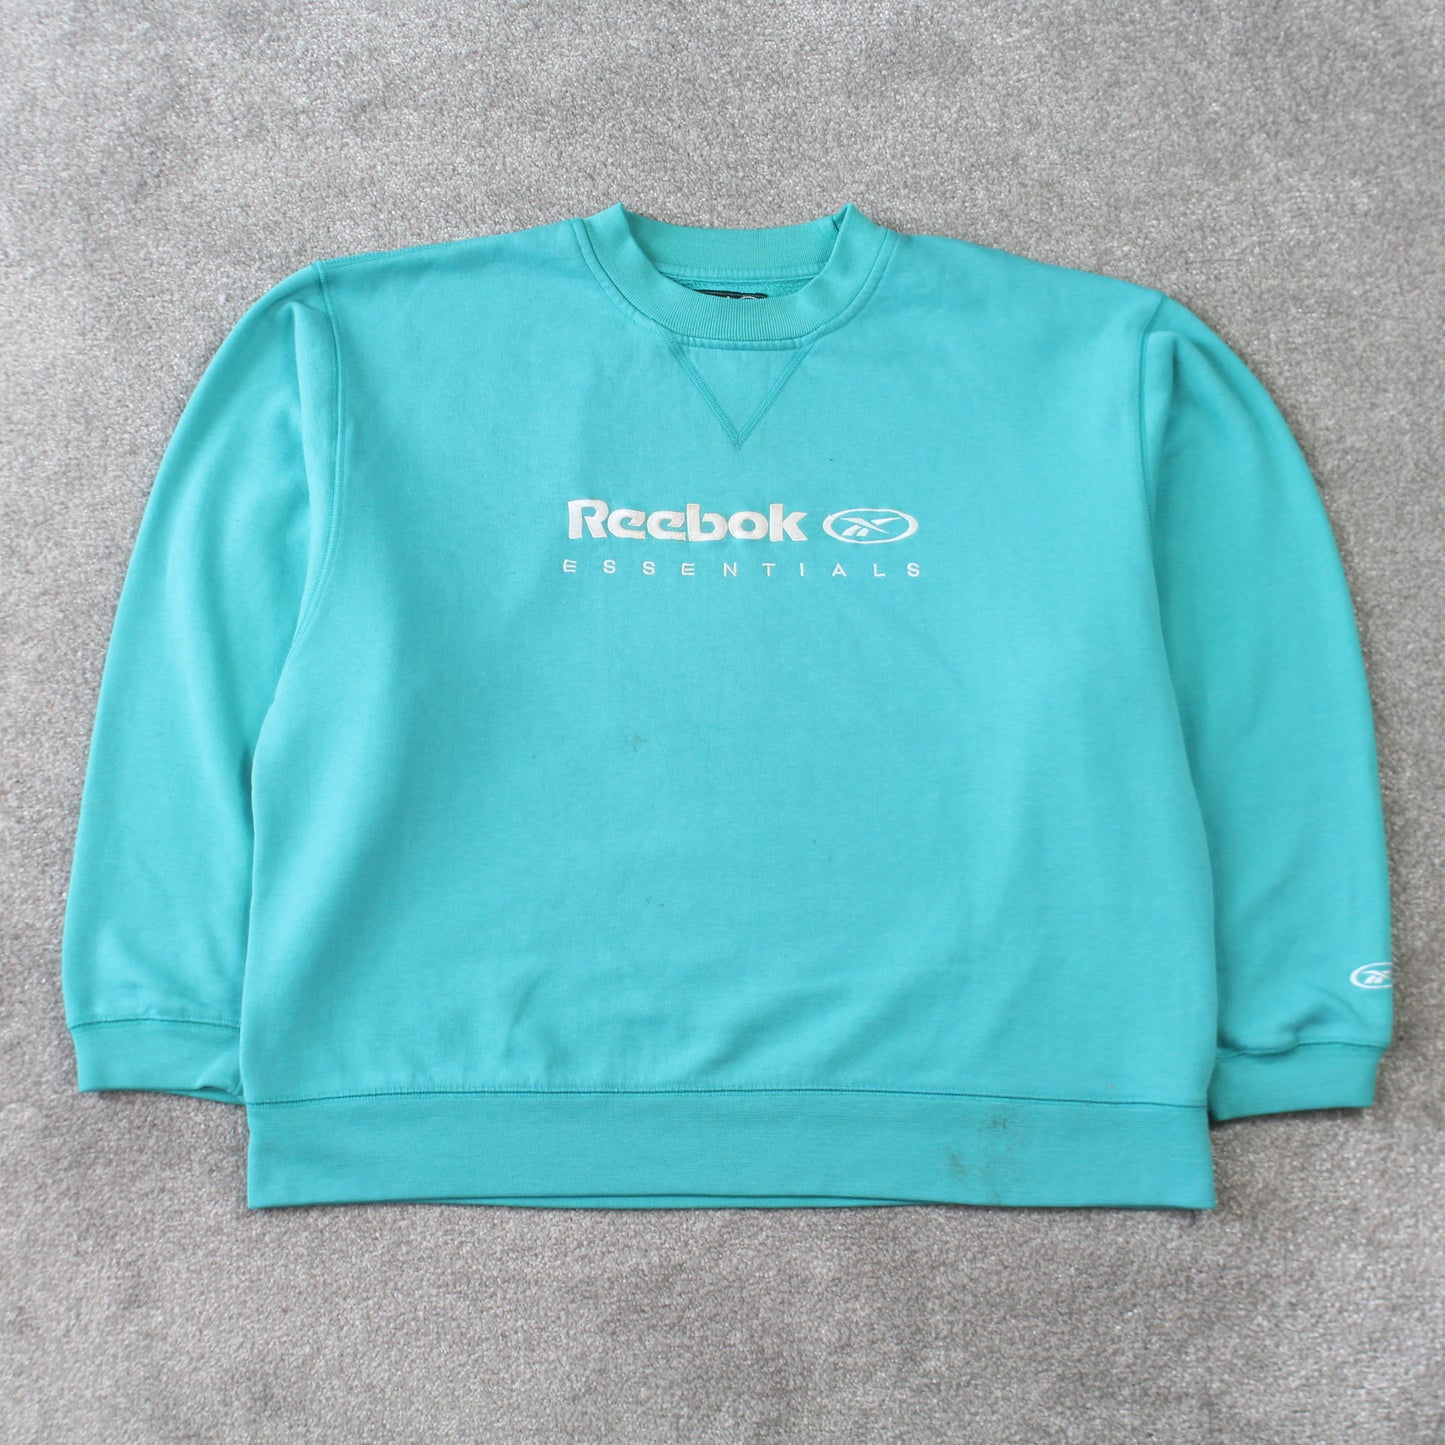 Vintage 1990s Reebok Sweatshirt Blue - (S)